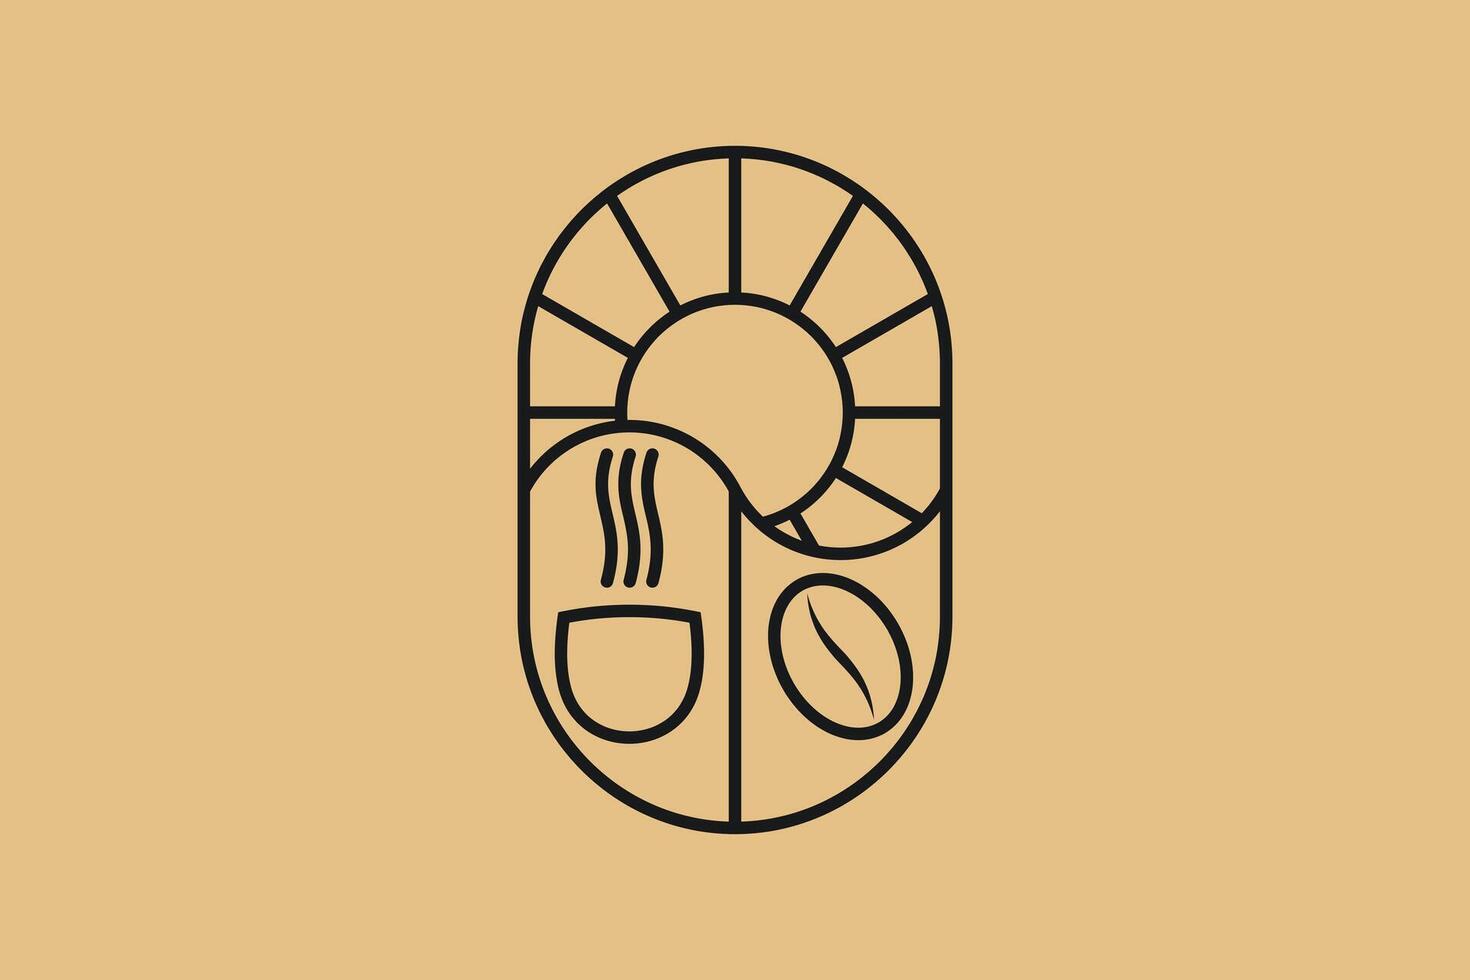 café logo conception avec Facile concept vecteur